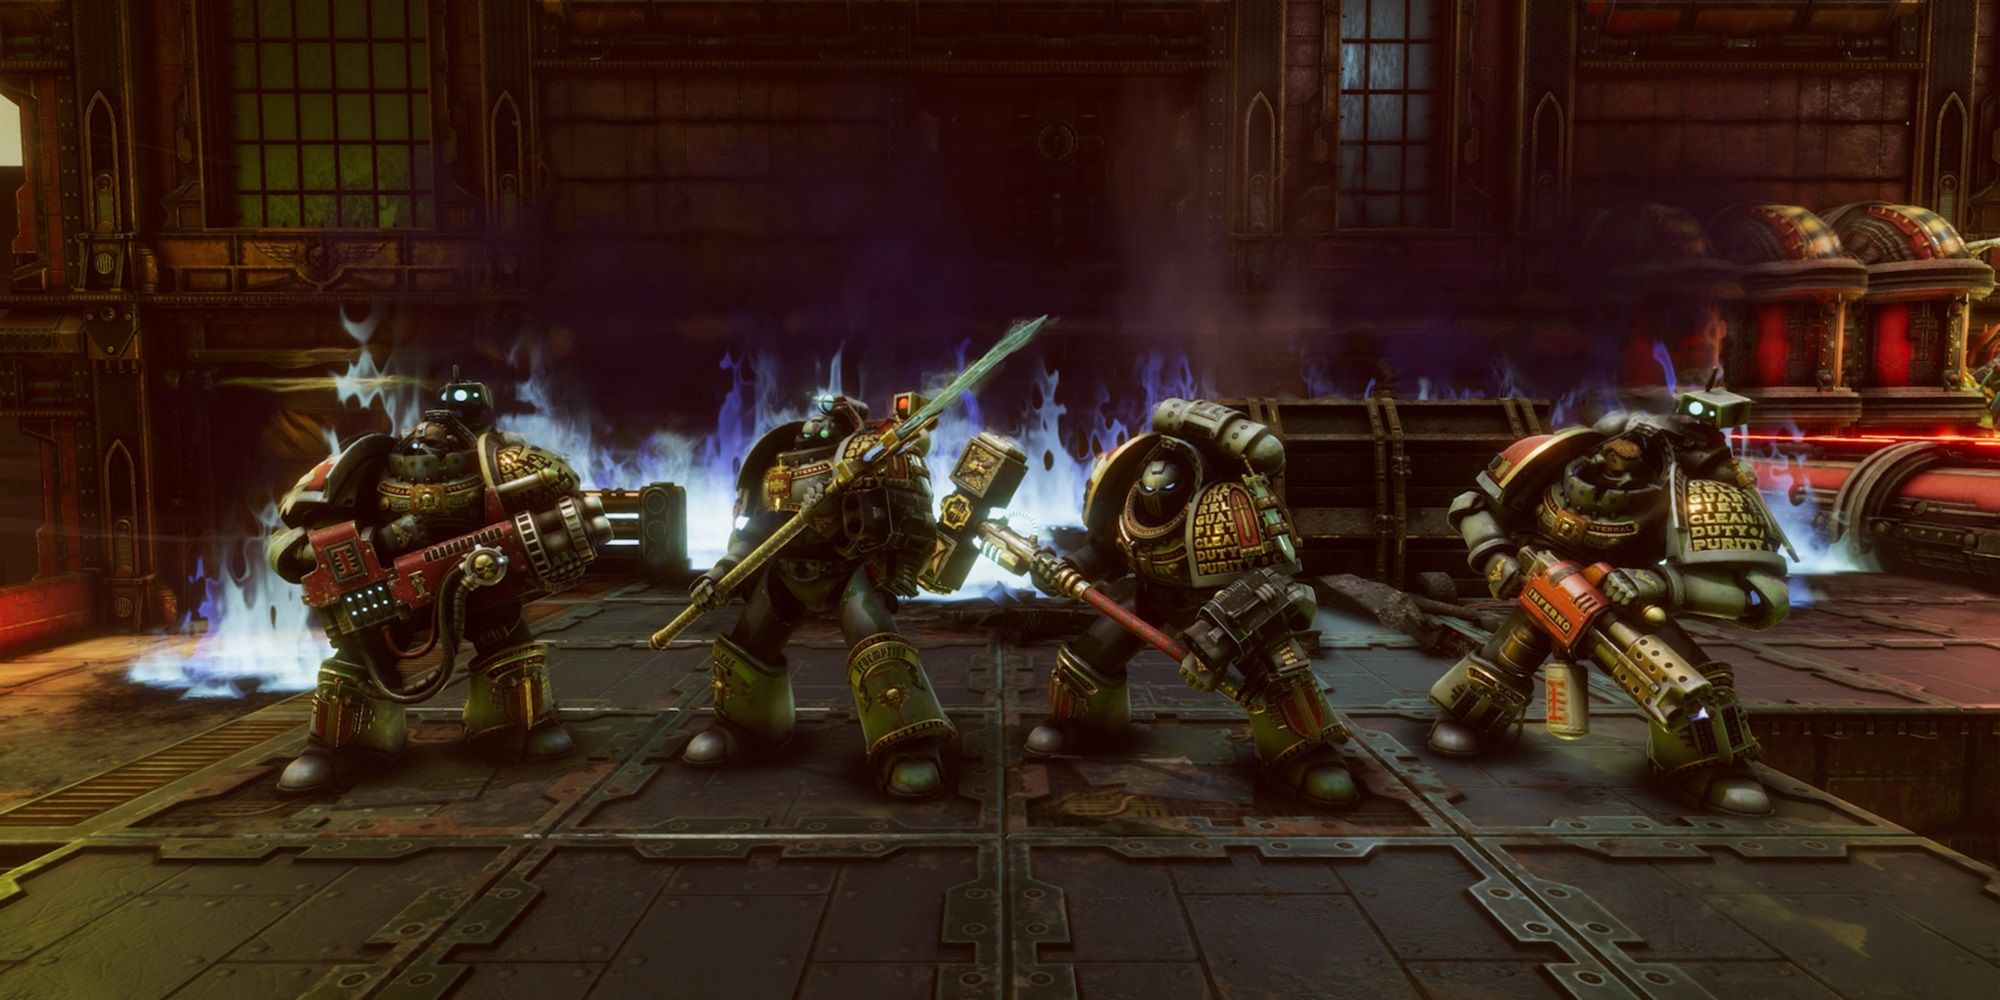 Warhammer 40,000: Chaos Gate - Daemonhunters download